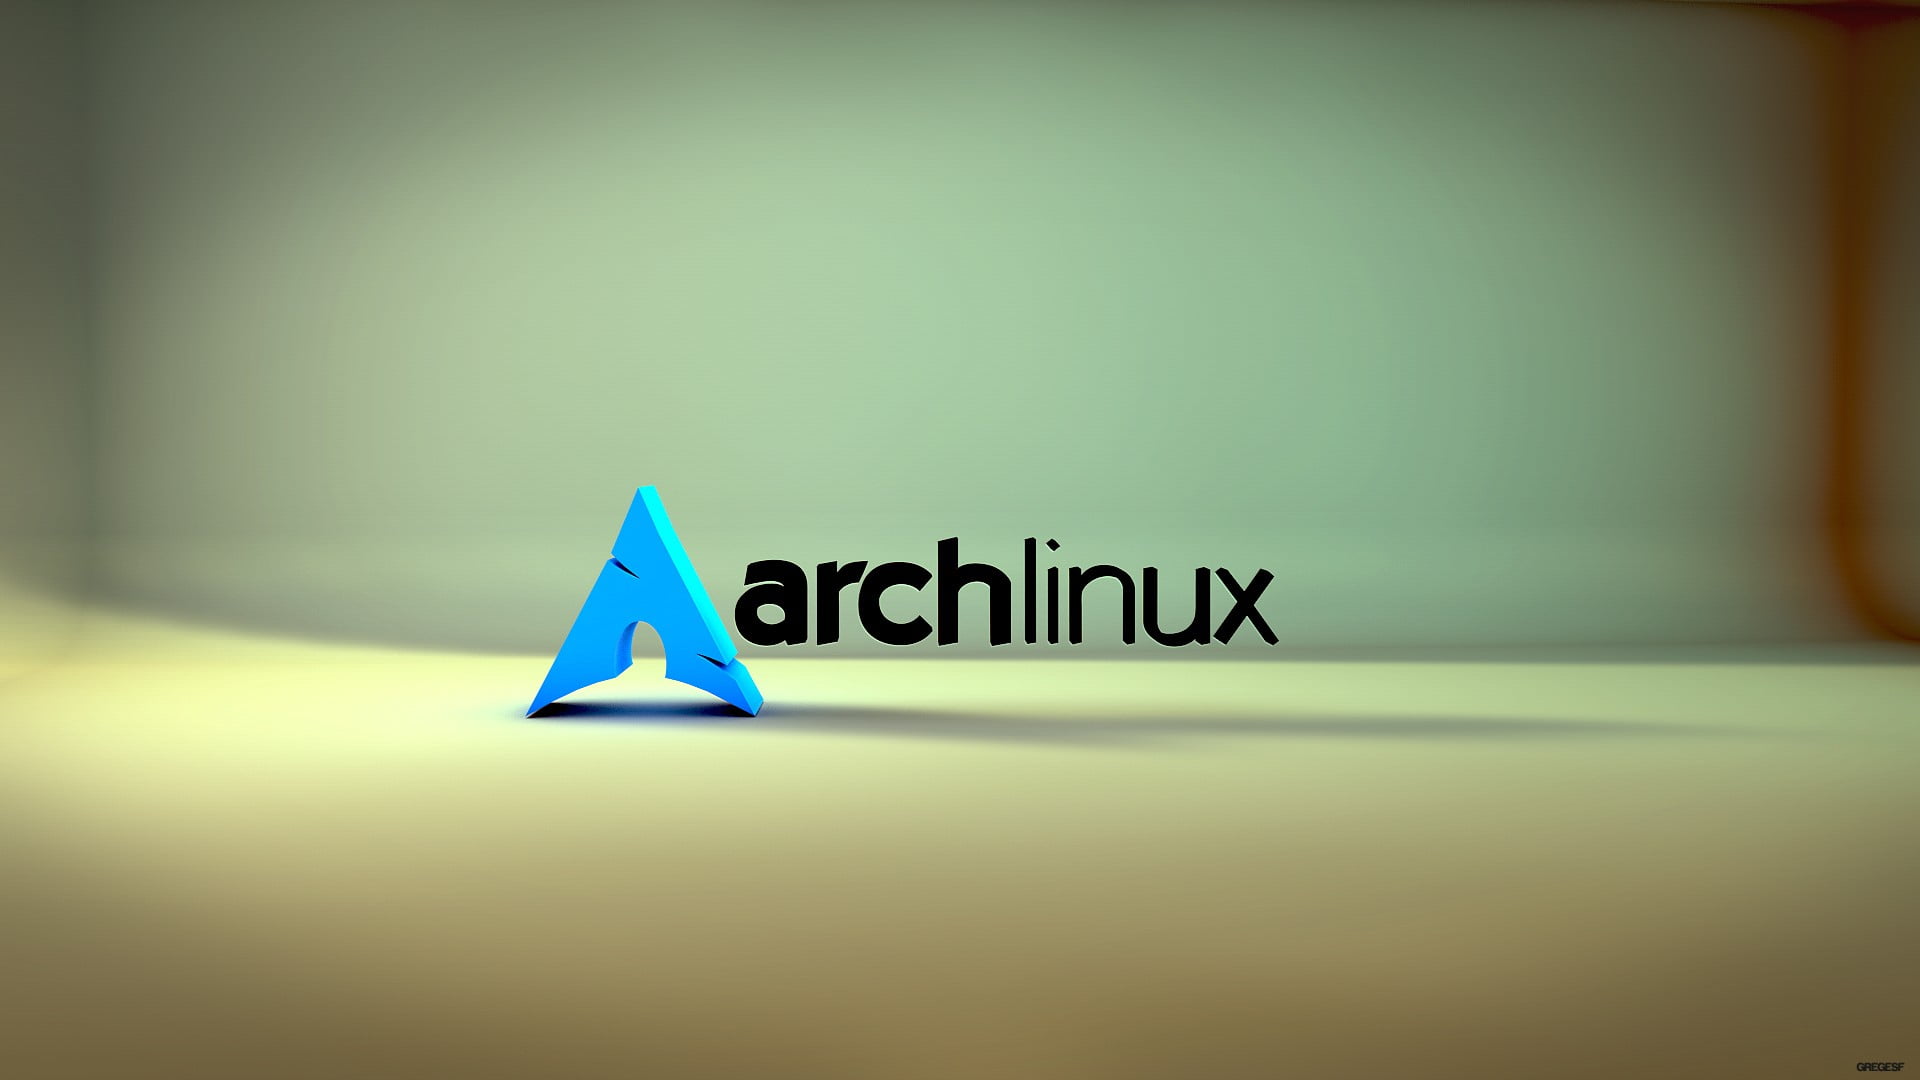 1920x1080 Resolution Archlinux Logo Linux Arch Linux Unix